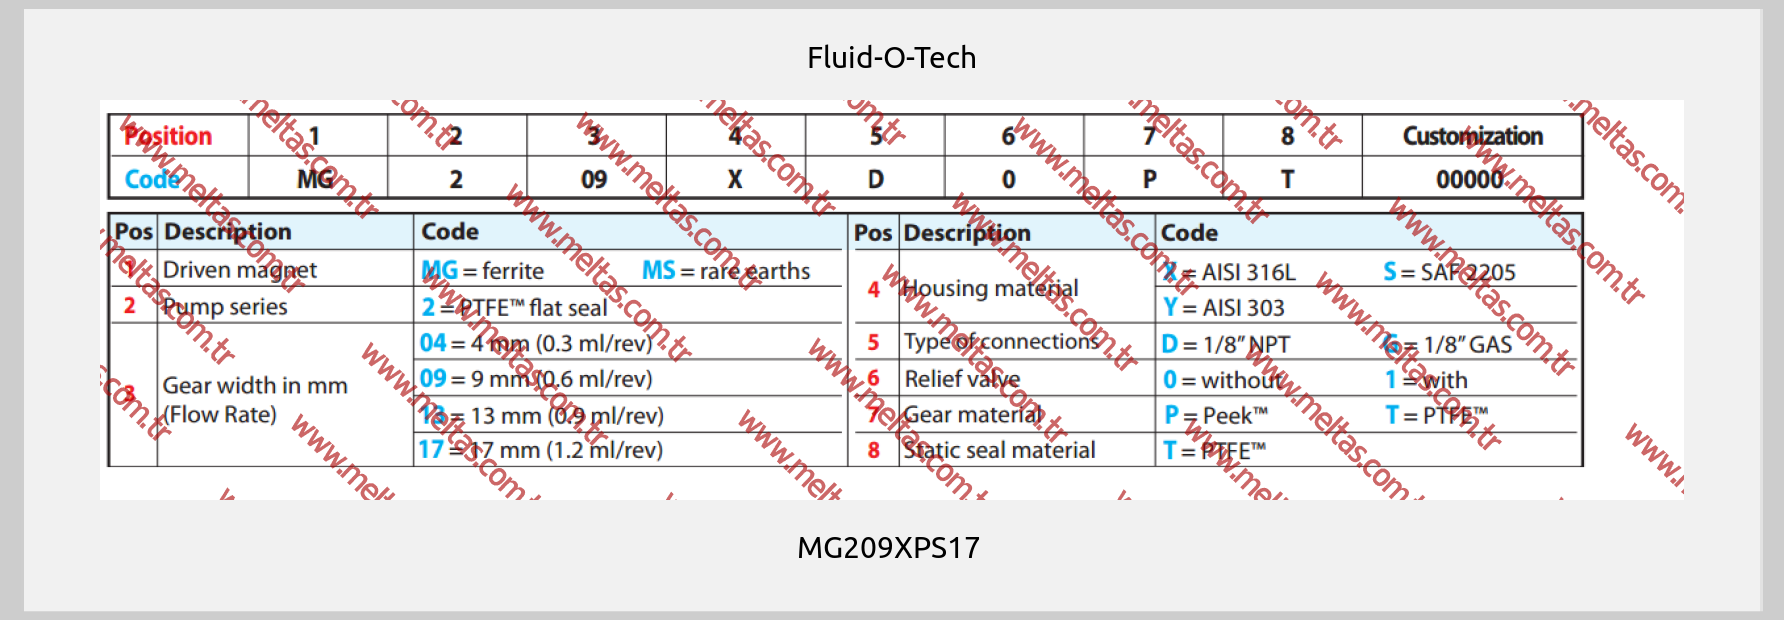 Fluid-O-Tech-MG209XPS17 